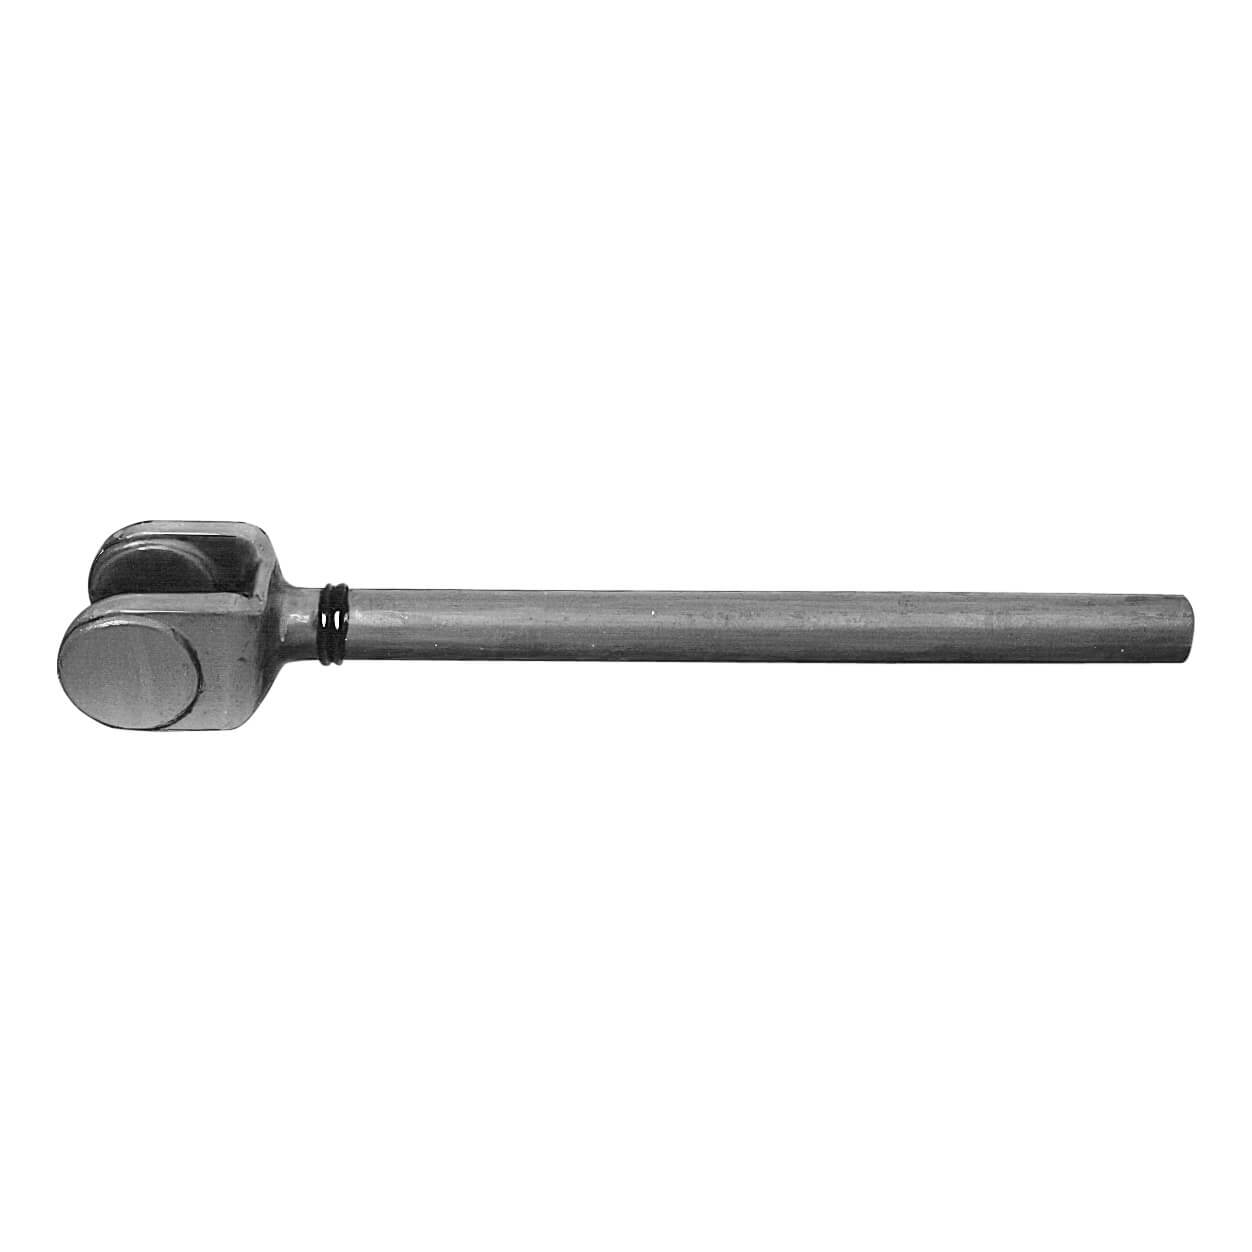 Front axle yoke shaft for four-wheel-drive vehicles - bar stock to yoke forging